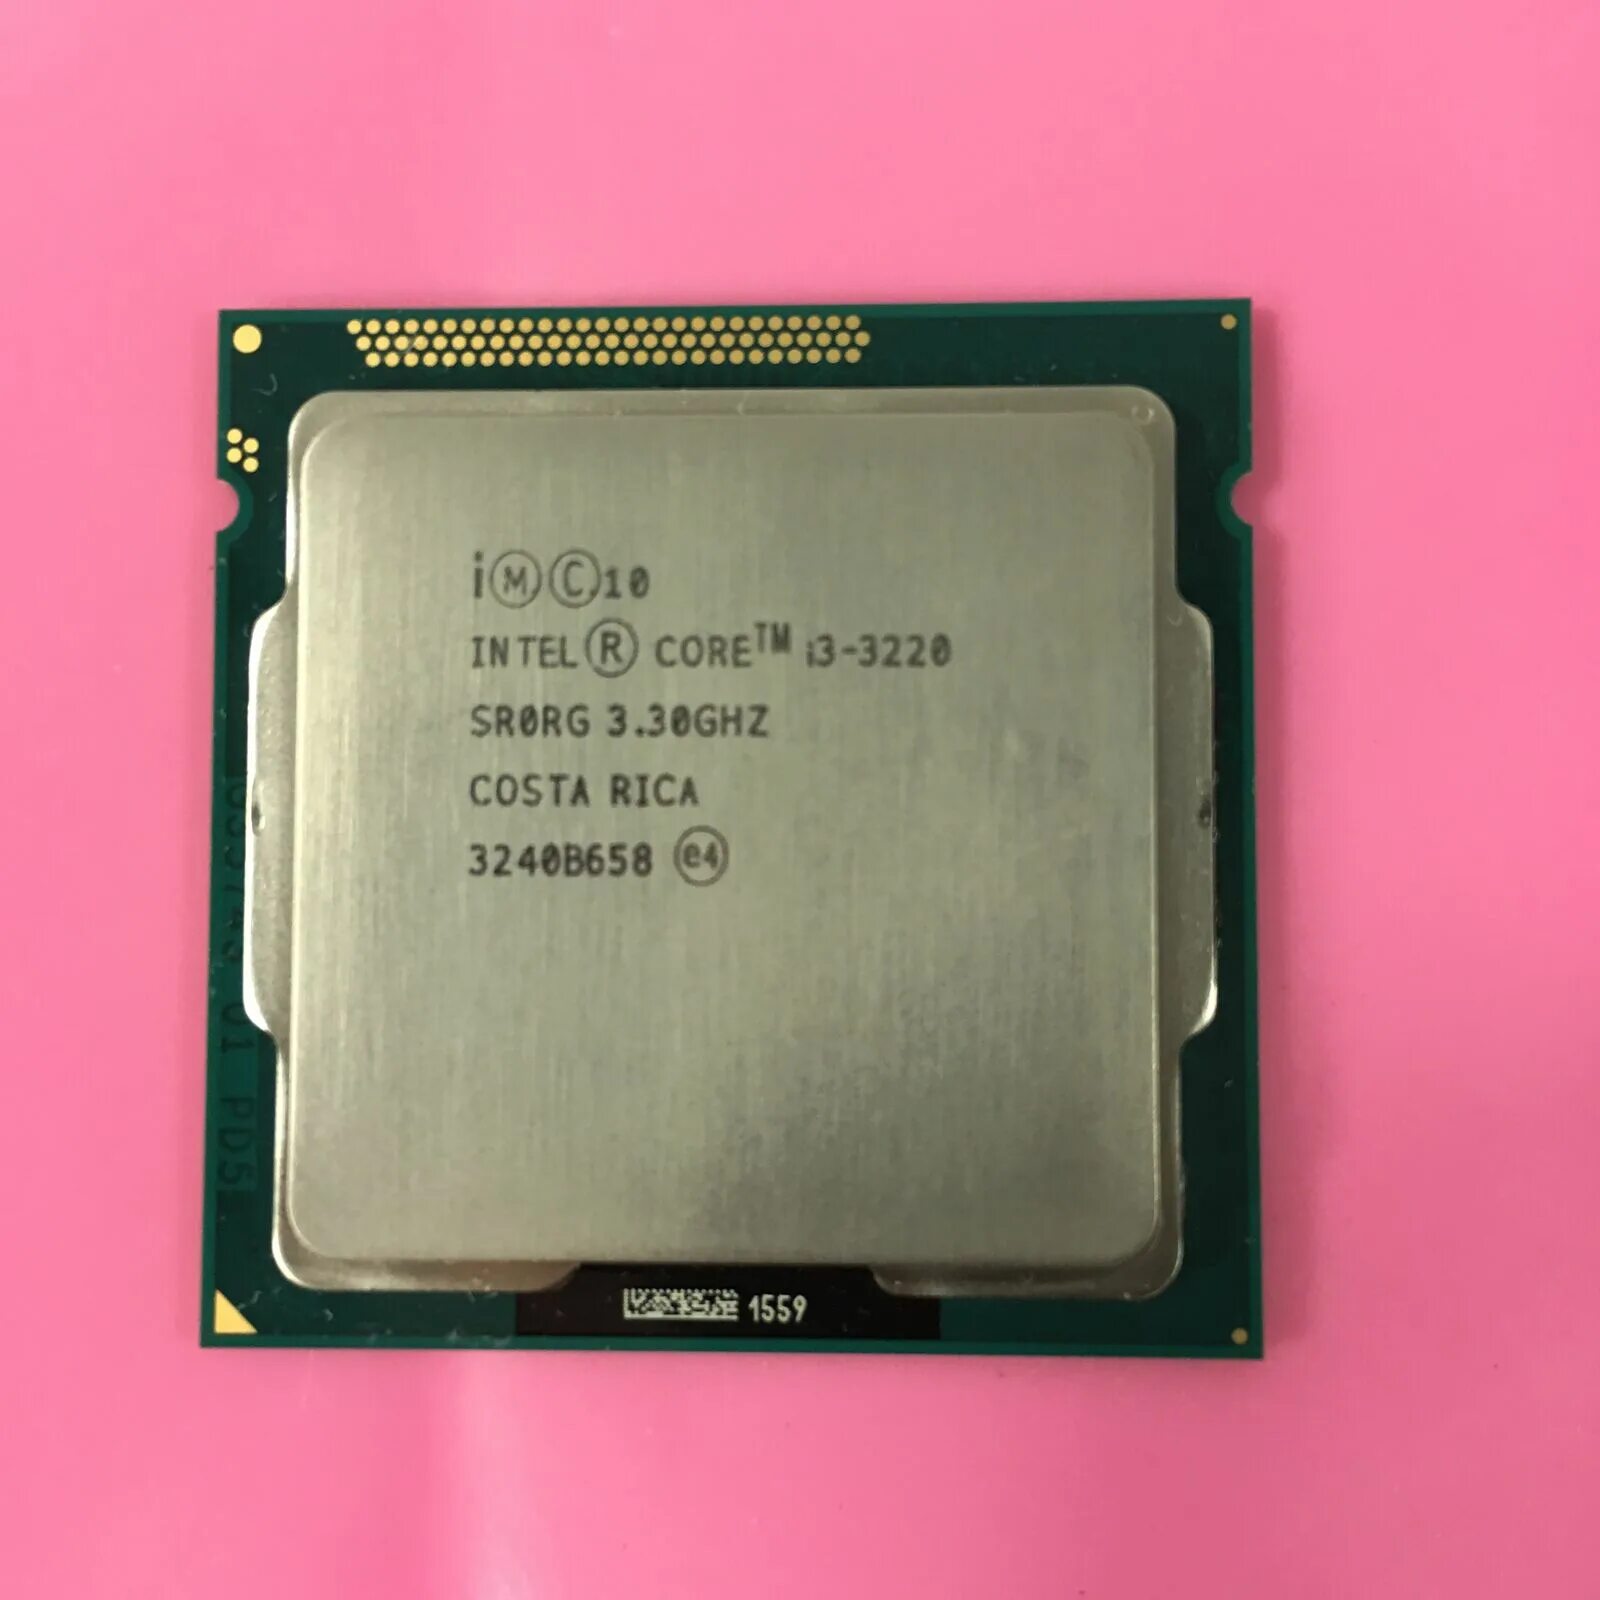 Интел 3470. Intel Core i5 3470. Intel сокет i3-3220. Intel Core i5 3470 сокет. -Процессор Intel Core i5-3470 до 3,60ггц 4 ядра, 4 потока.